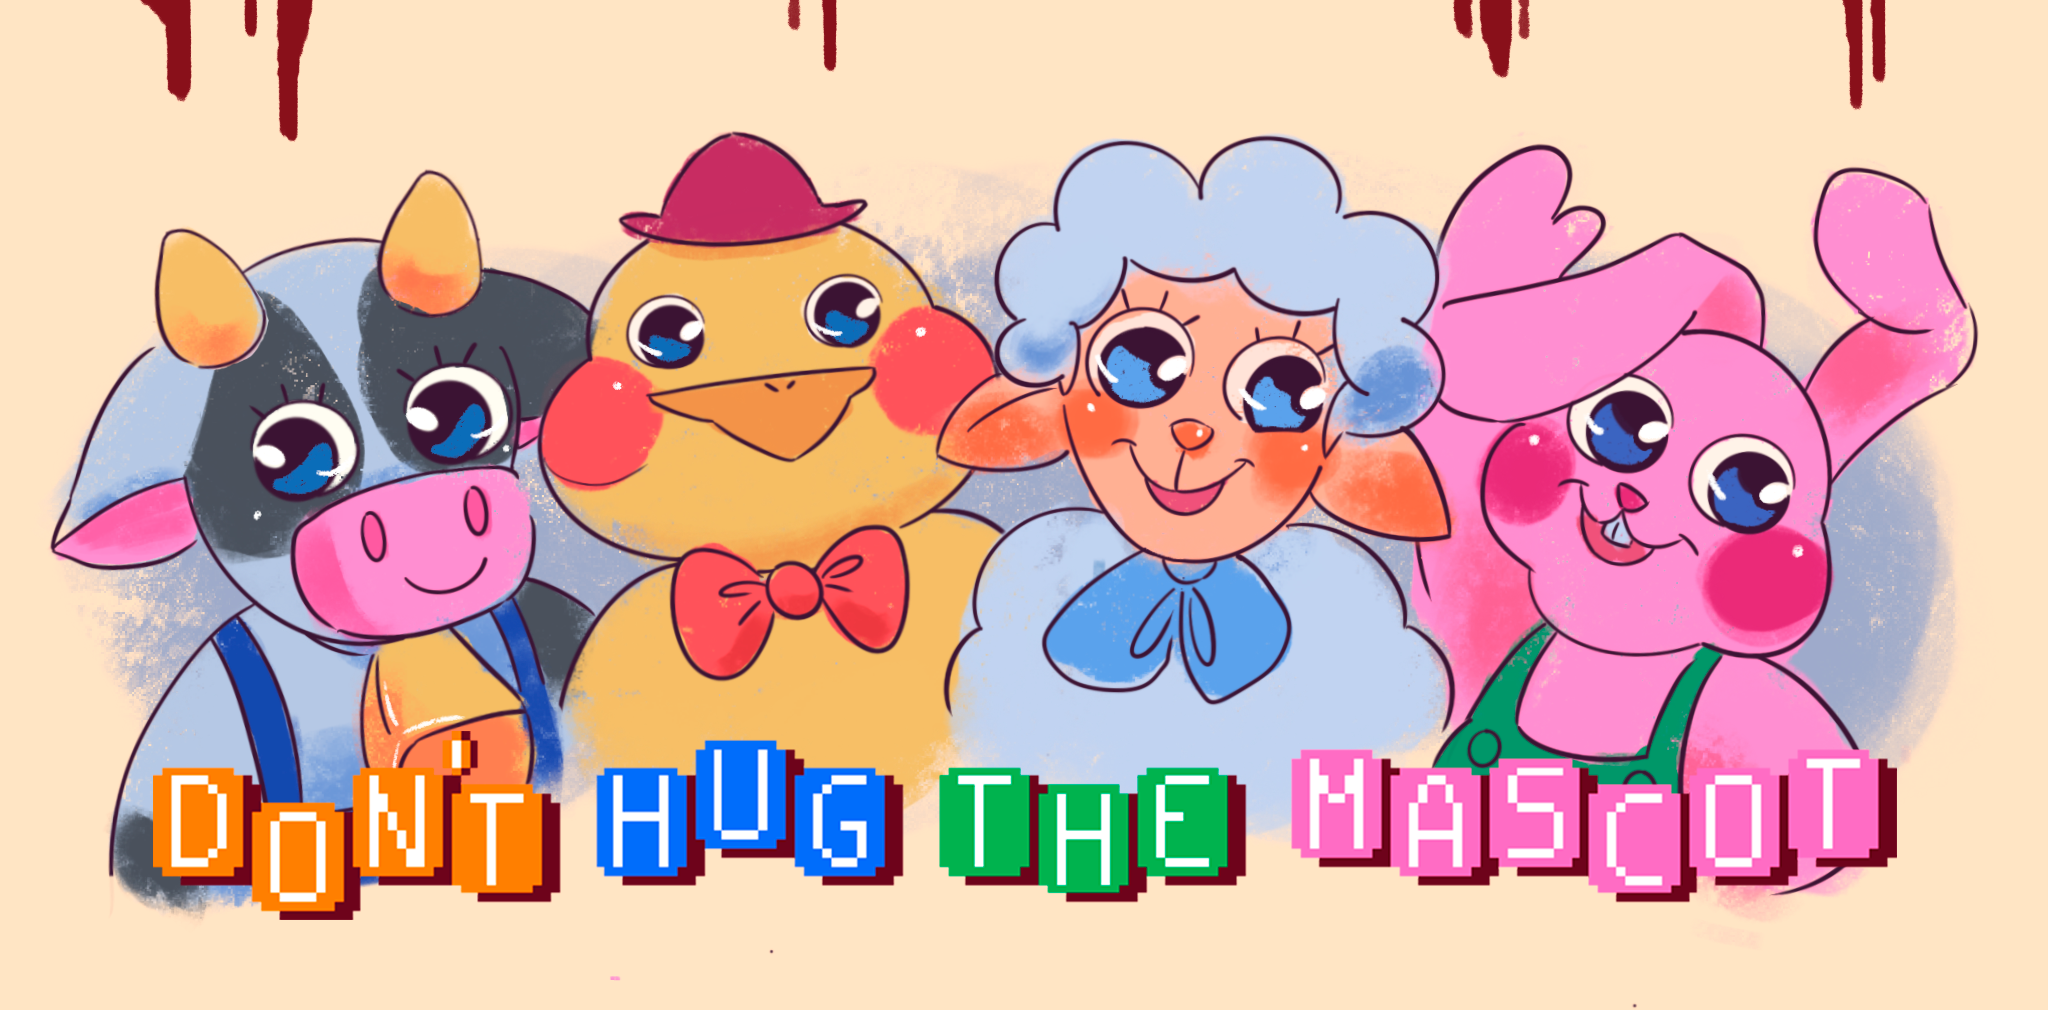 Don't Hug the Mascot